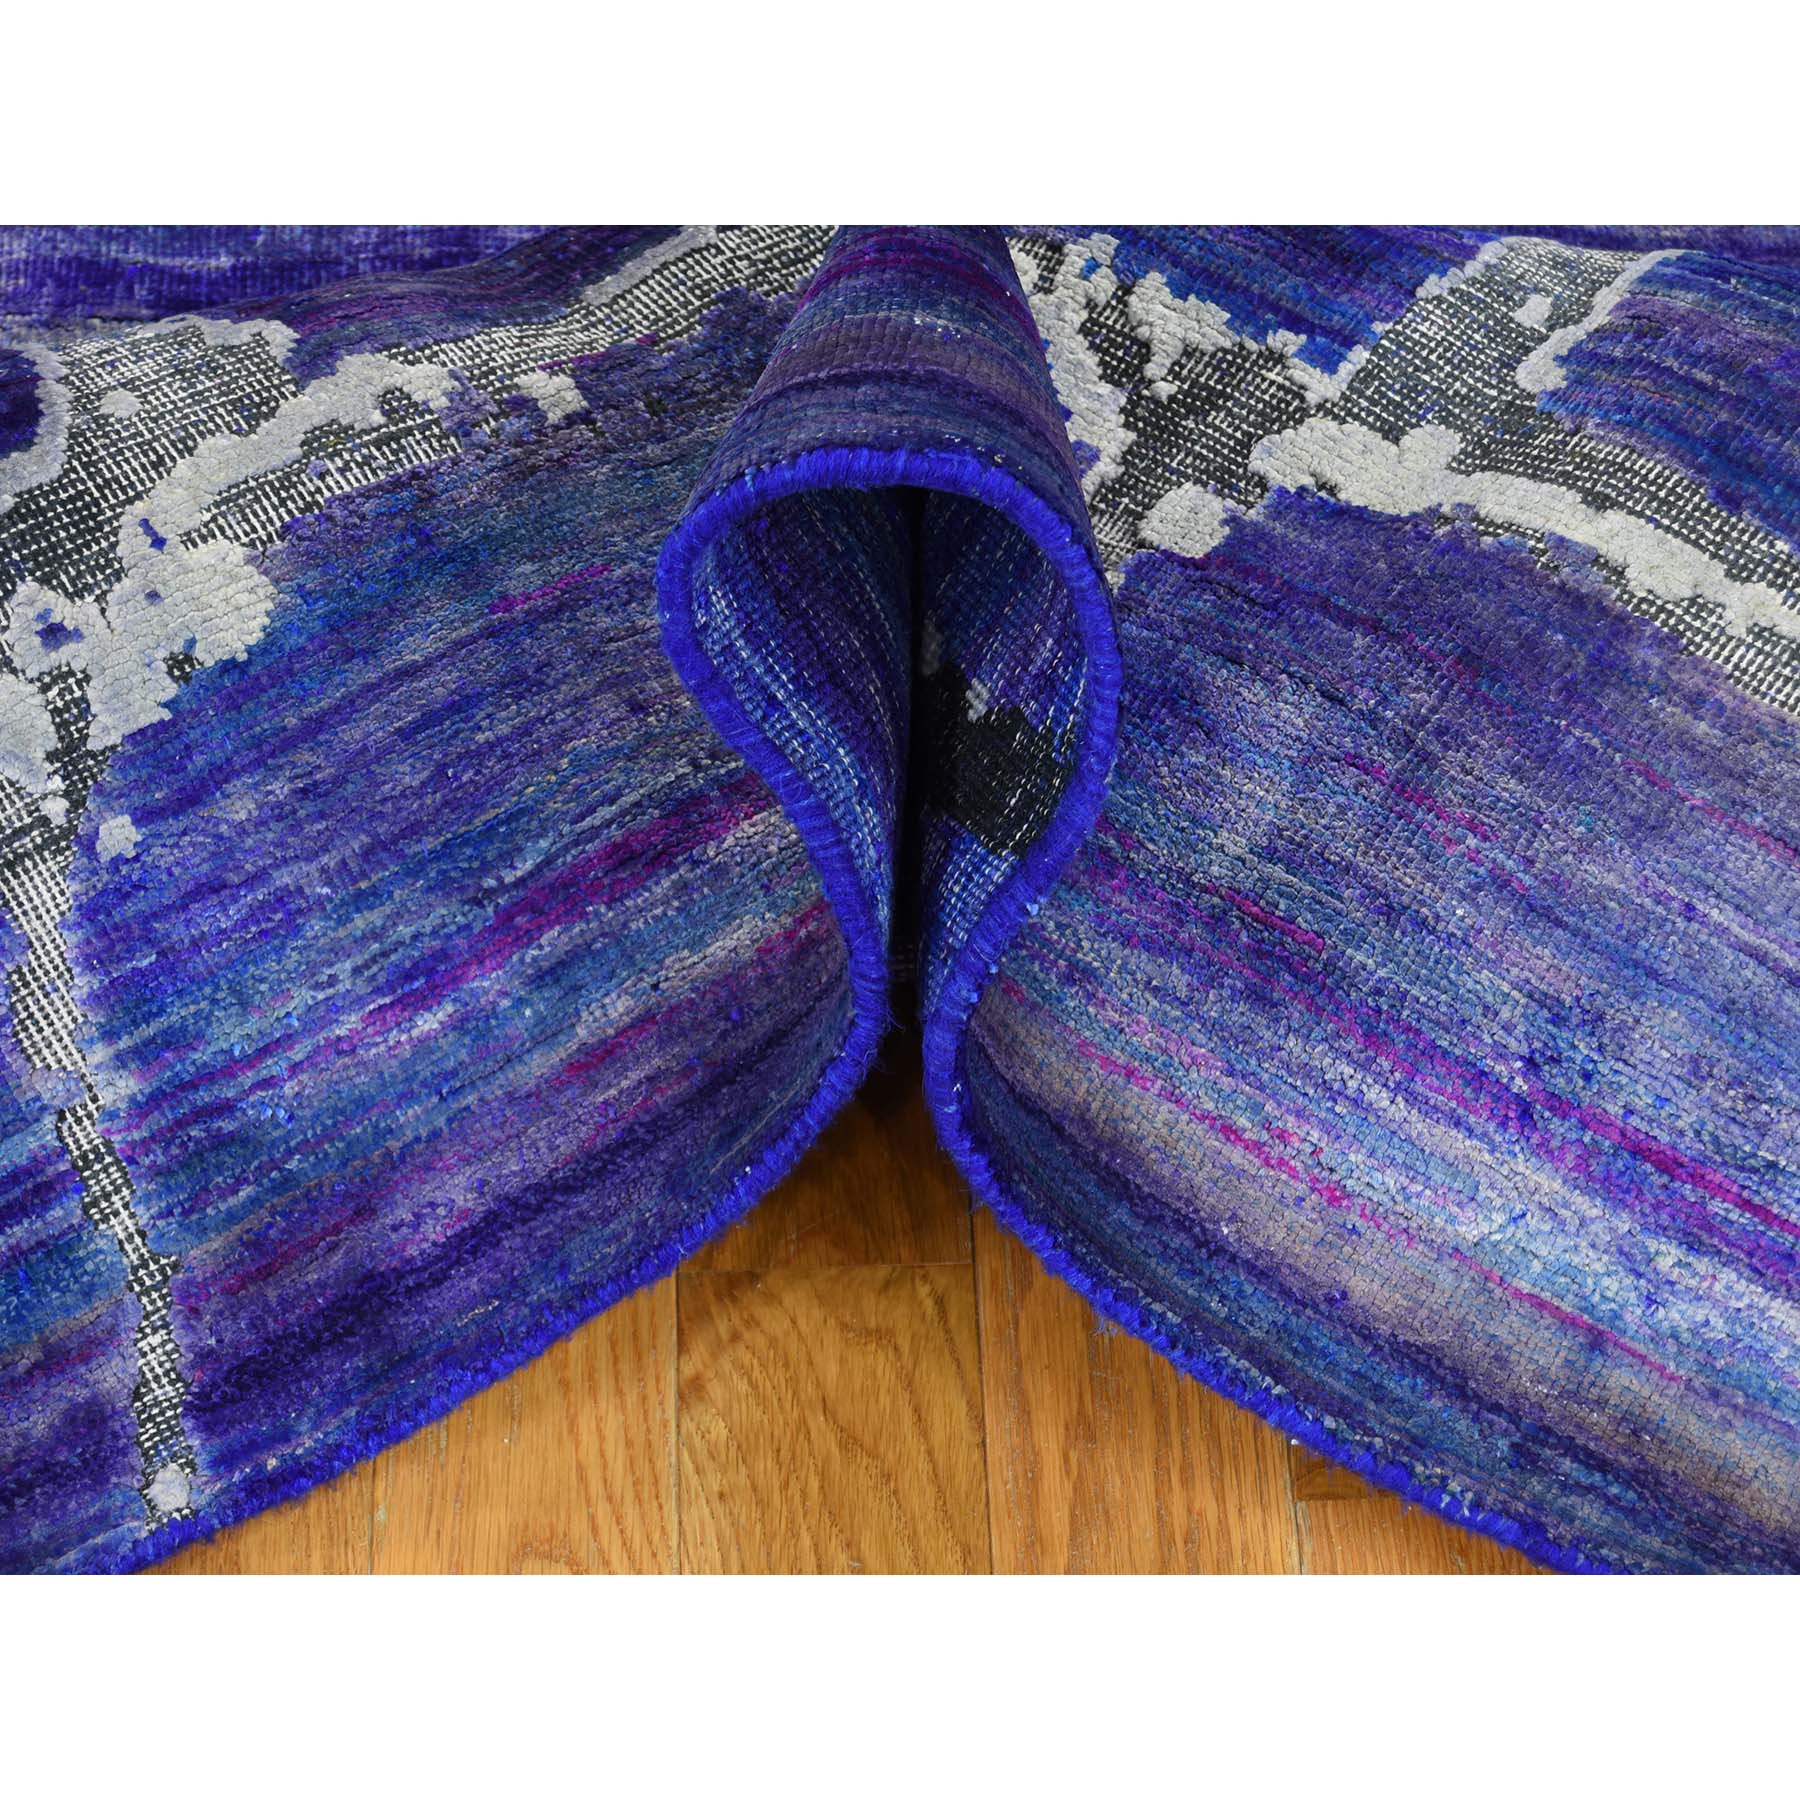 8-10 x12- DIMINISHING BRICKS Sari Silk with Textured Wool Hand-Knotted Oriental Rug 